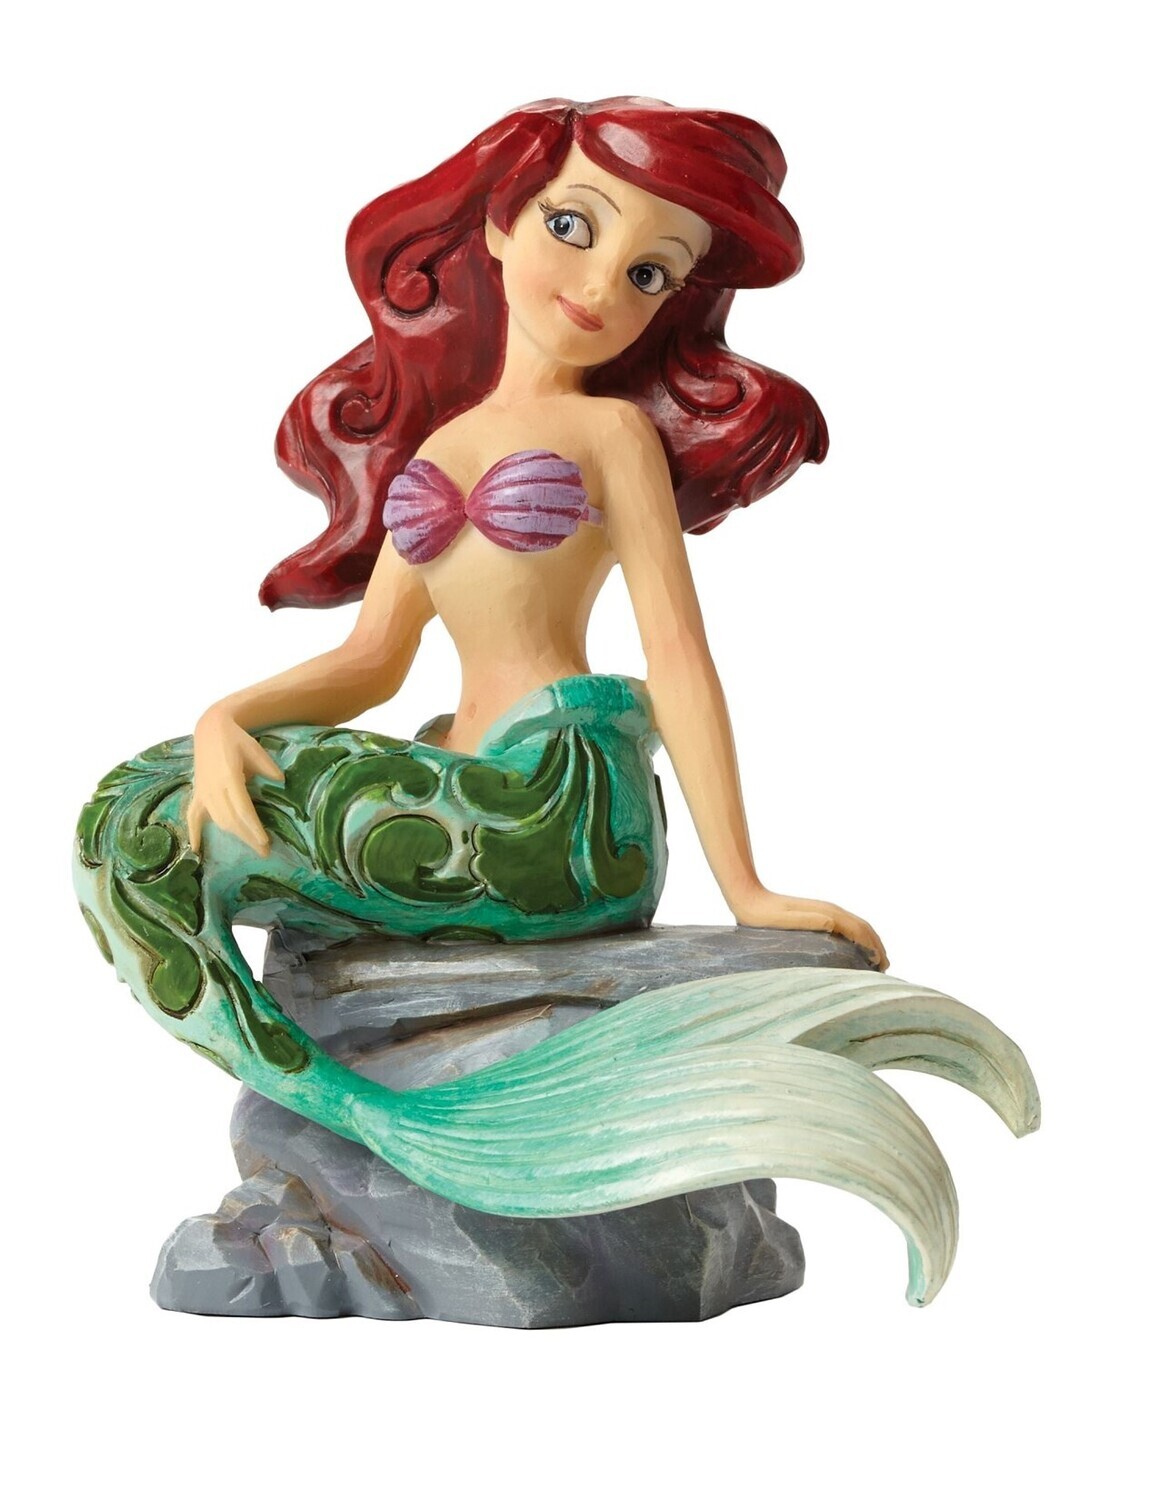 Jim Shore Disney Traditions "Ariel Personality Pose - Splash of Fun" Figurine (4023530)